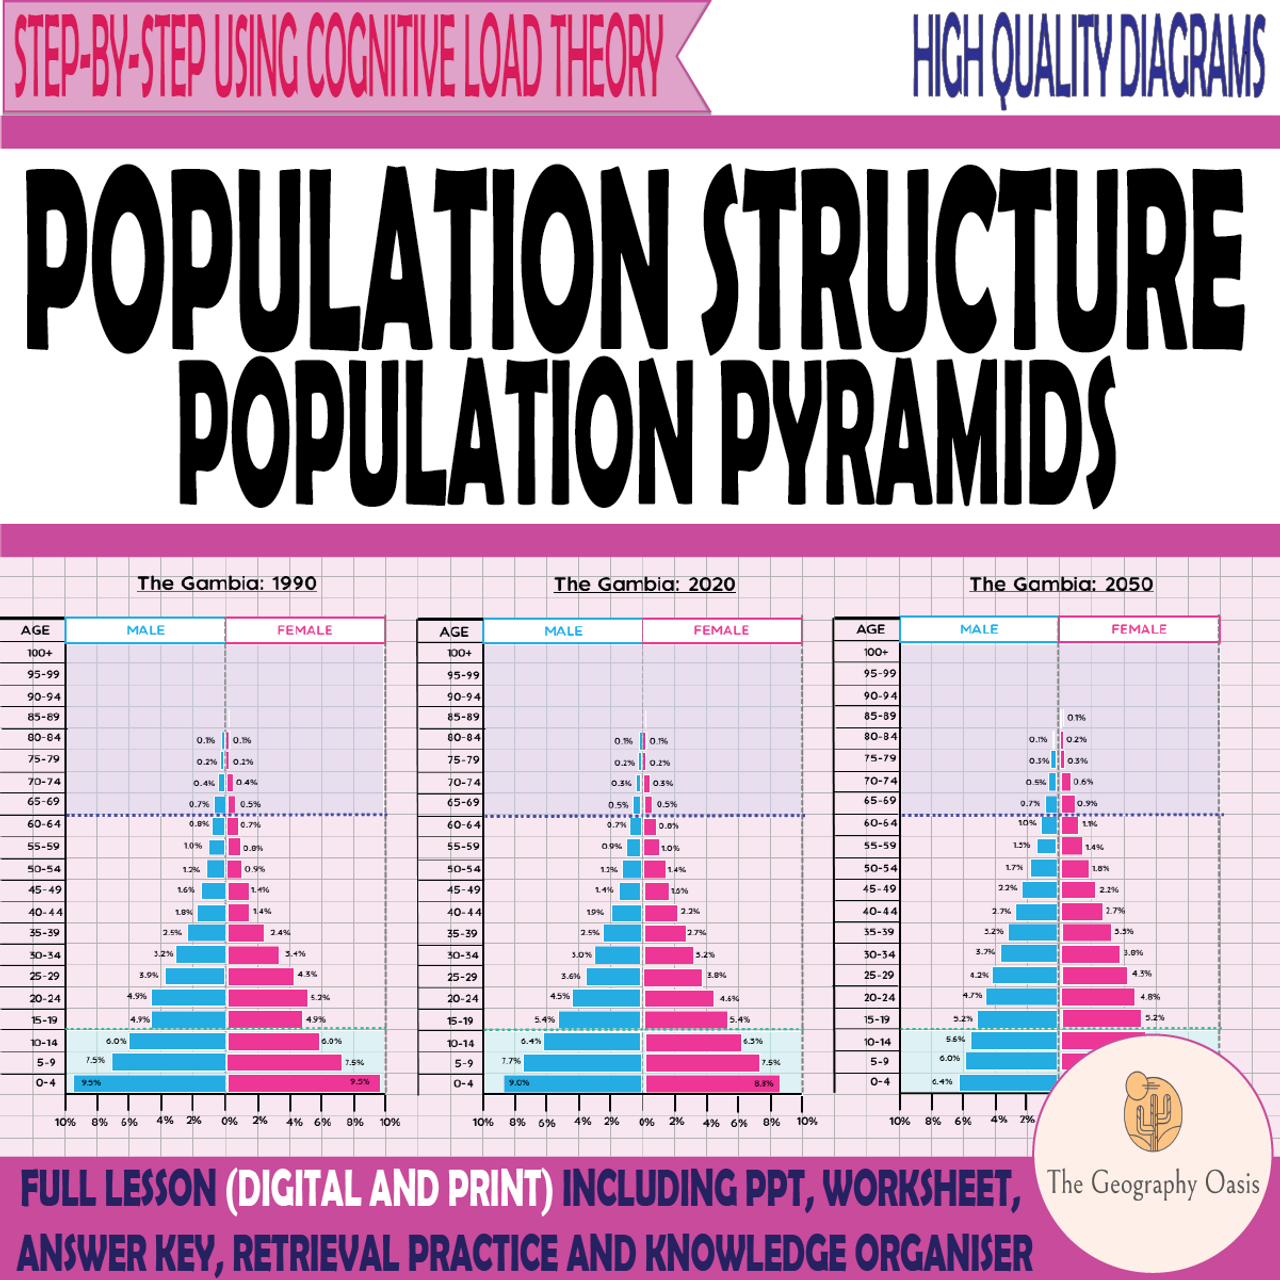 Population Structure (Pyramids)